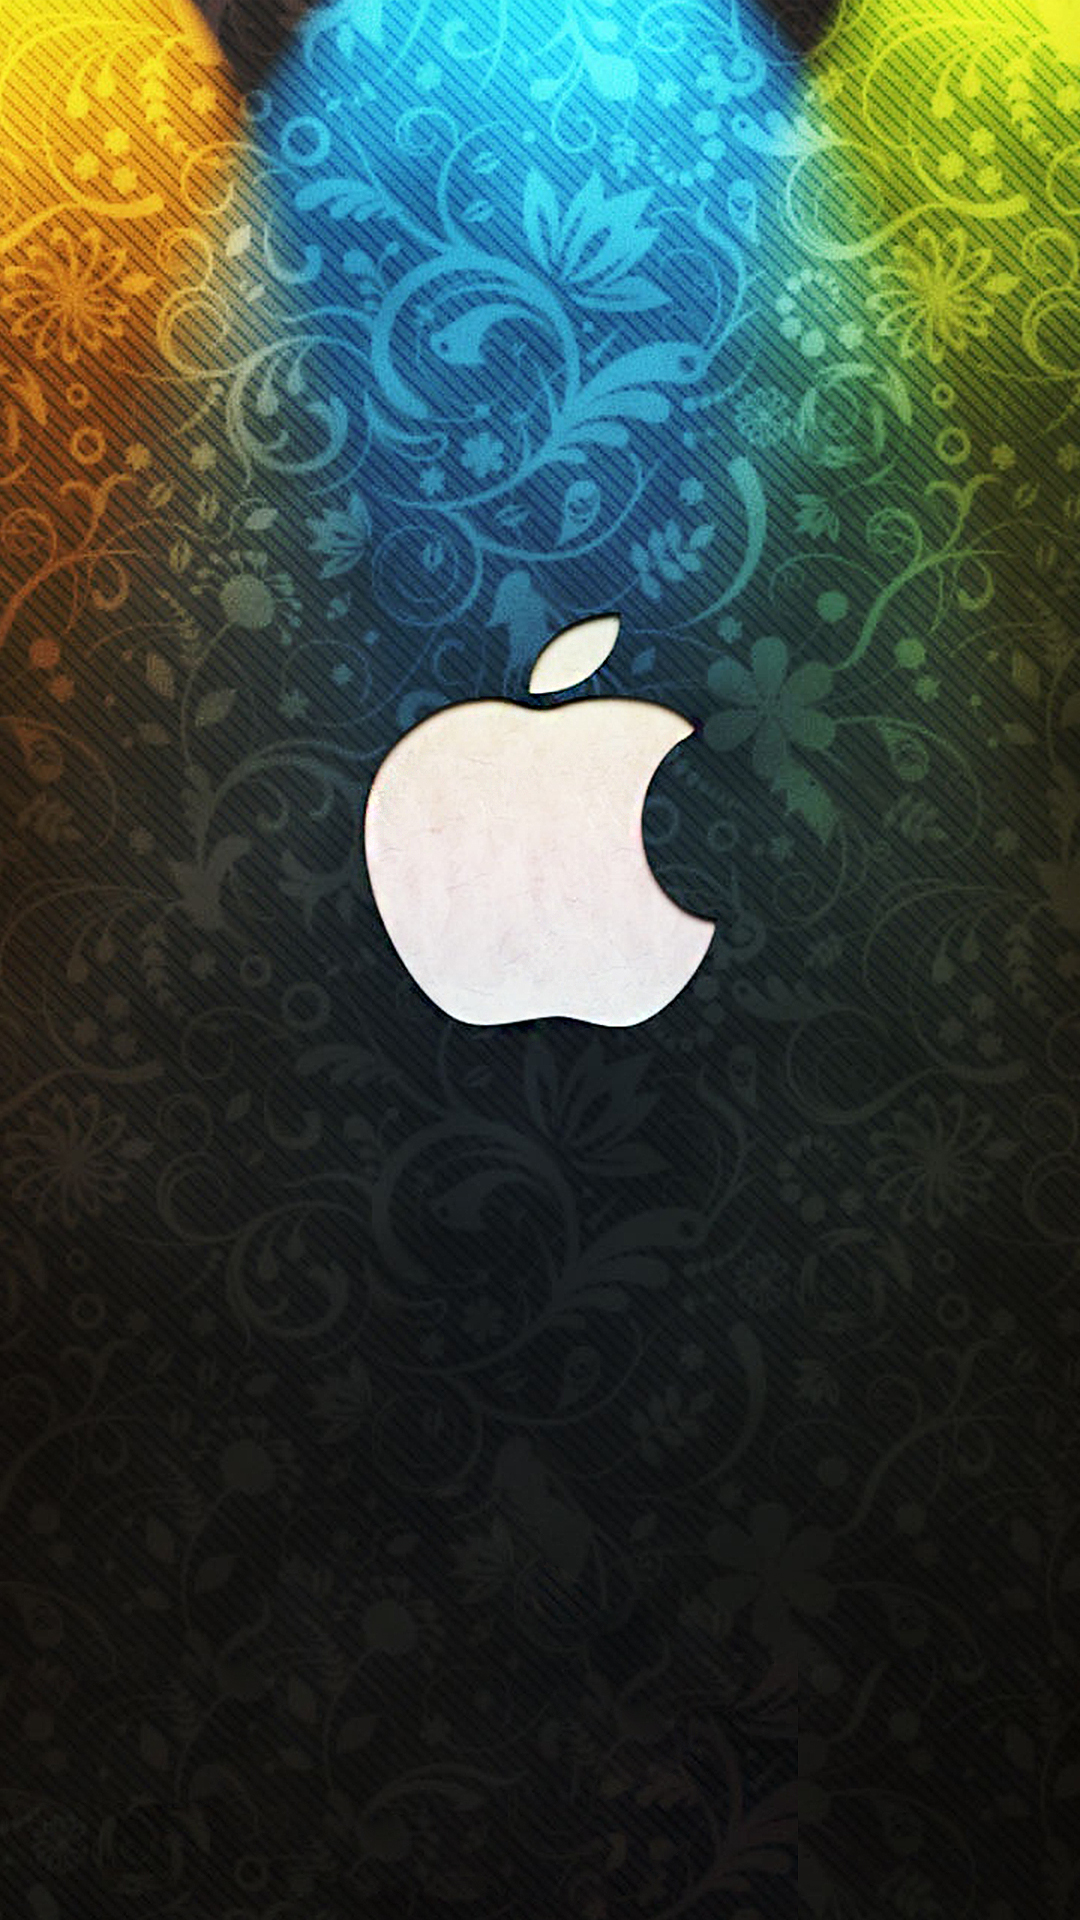 Wallpaper iPhone 6 Apple Mac